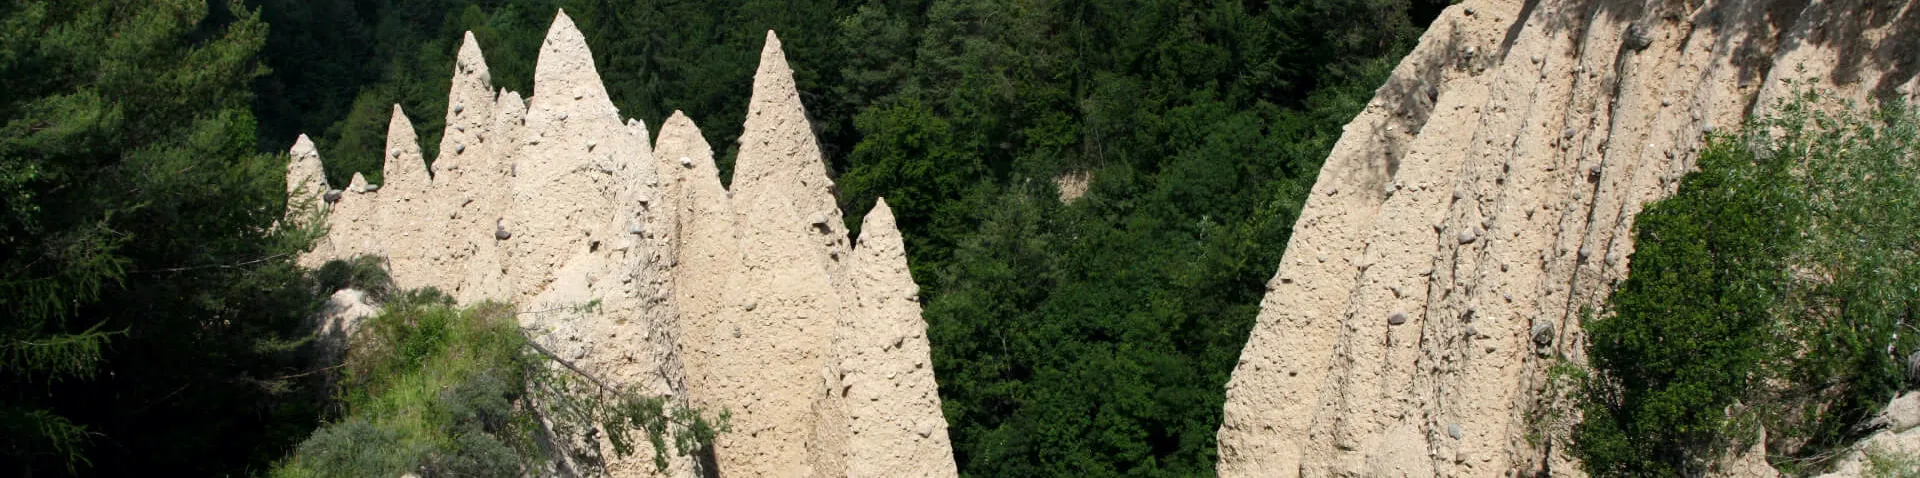 Erdpyramiden in dichtem Wald